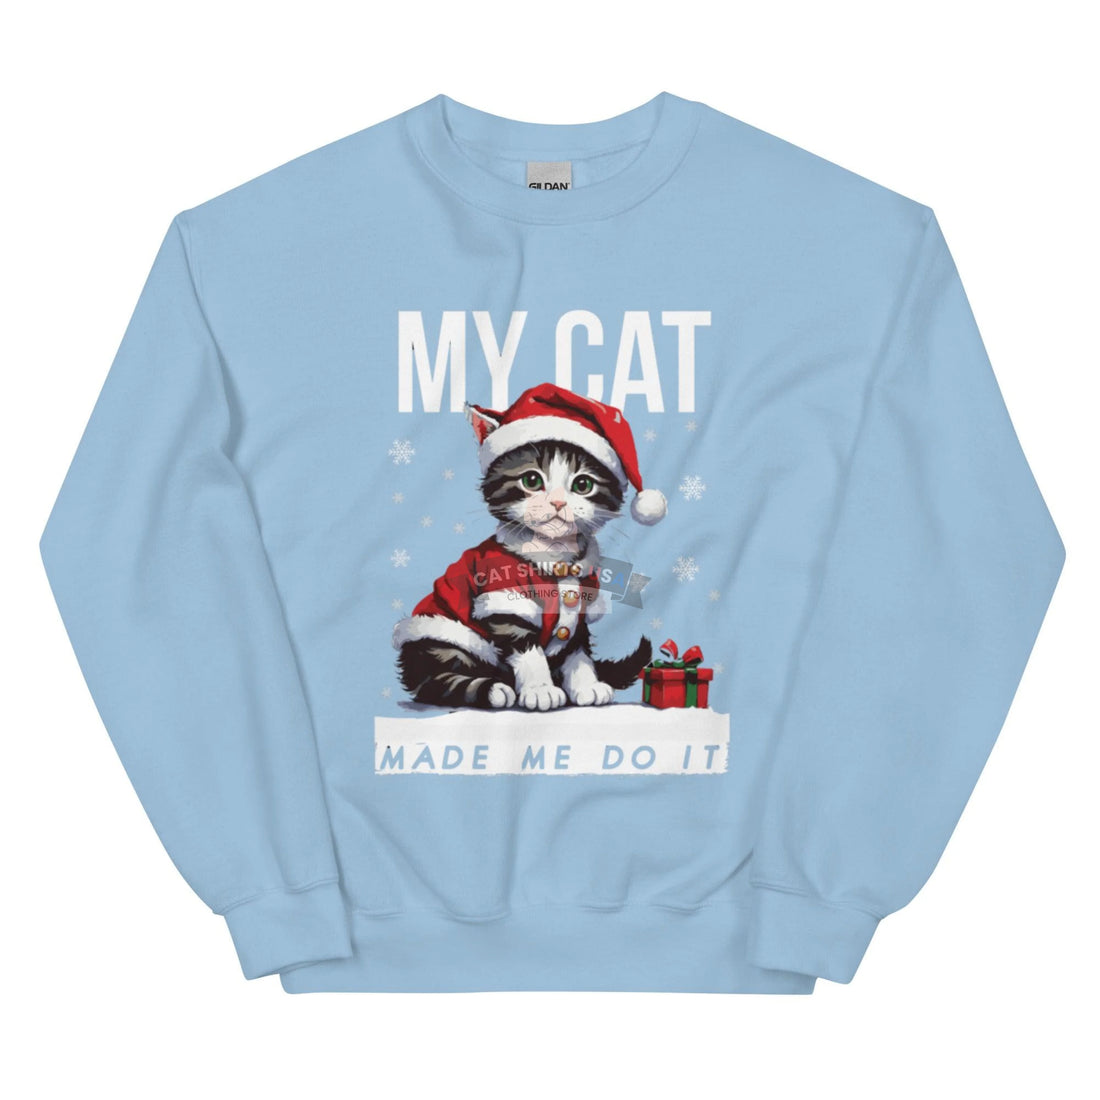 Made Me Do It Cat Sweatshirt - Cat Shirts USA